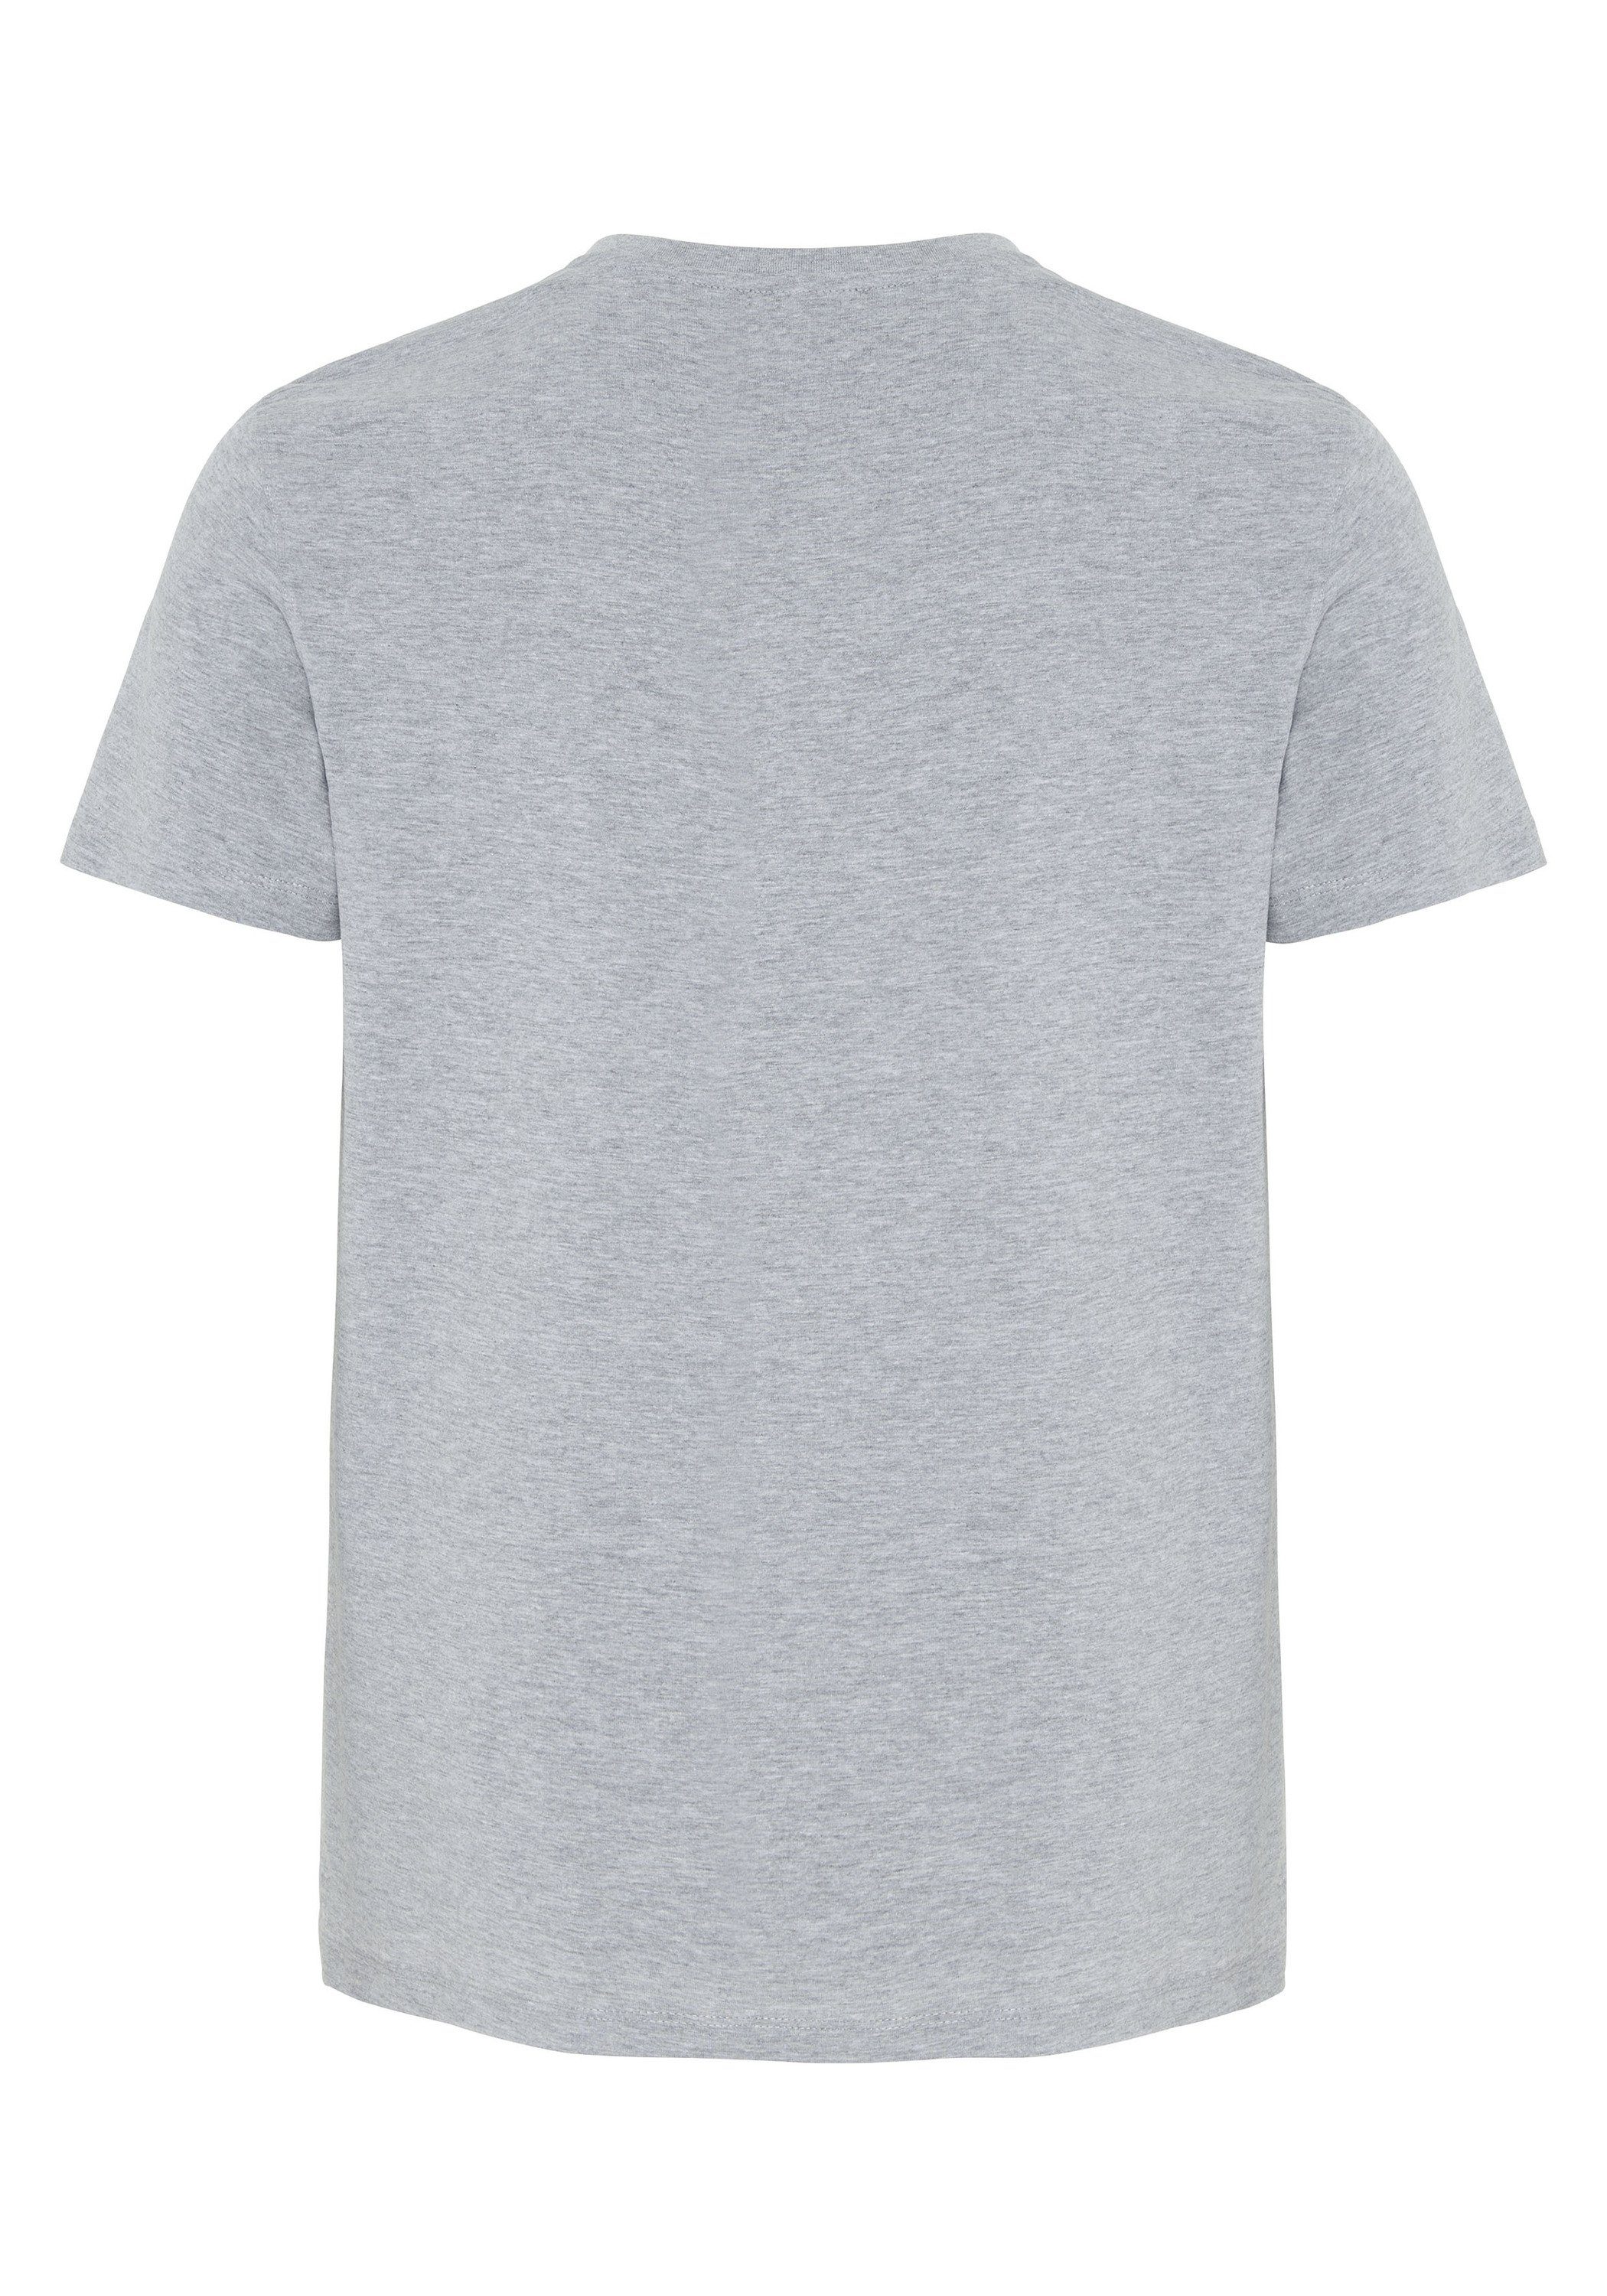 Print-Shirt Jeans Oklahoma Label-Trikot-Design Melange Gray 17-4402M Neutral im